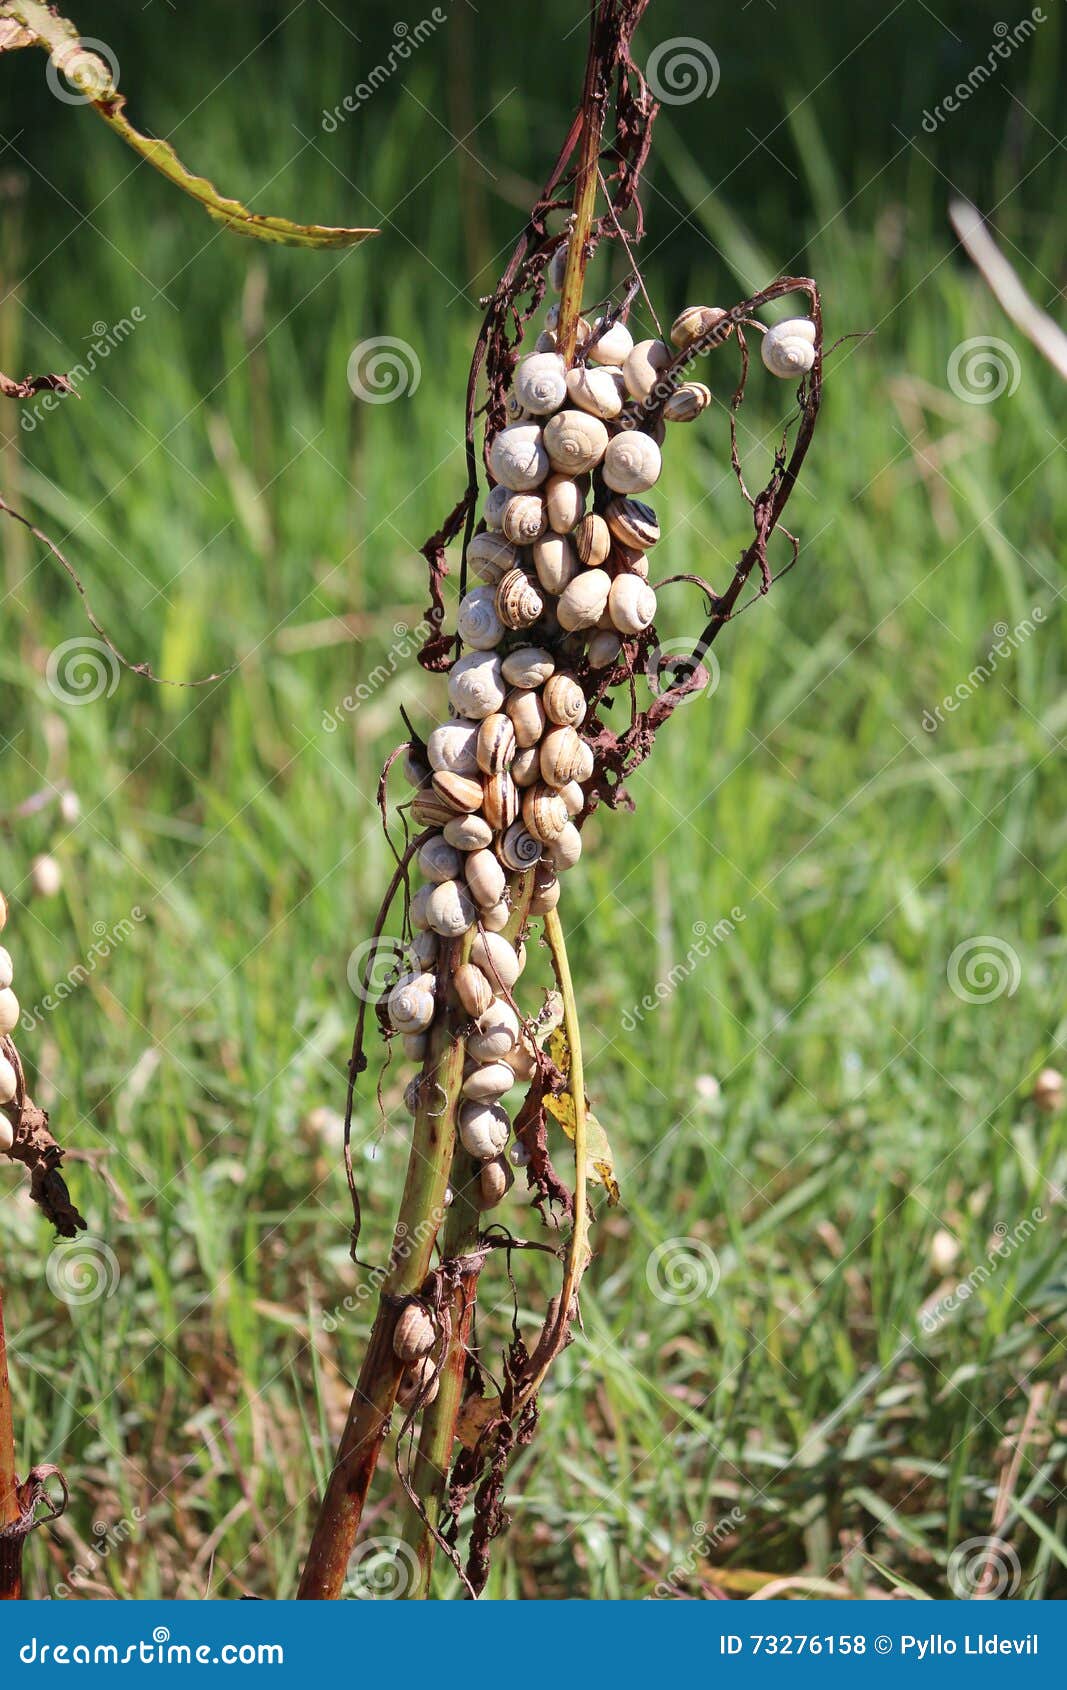 snails [from a farm]